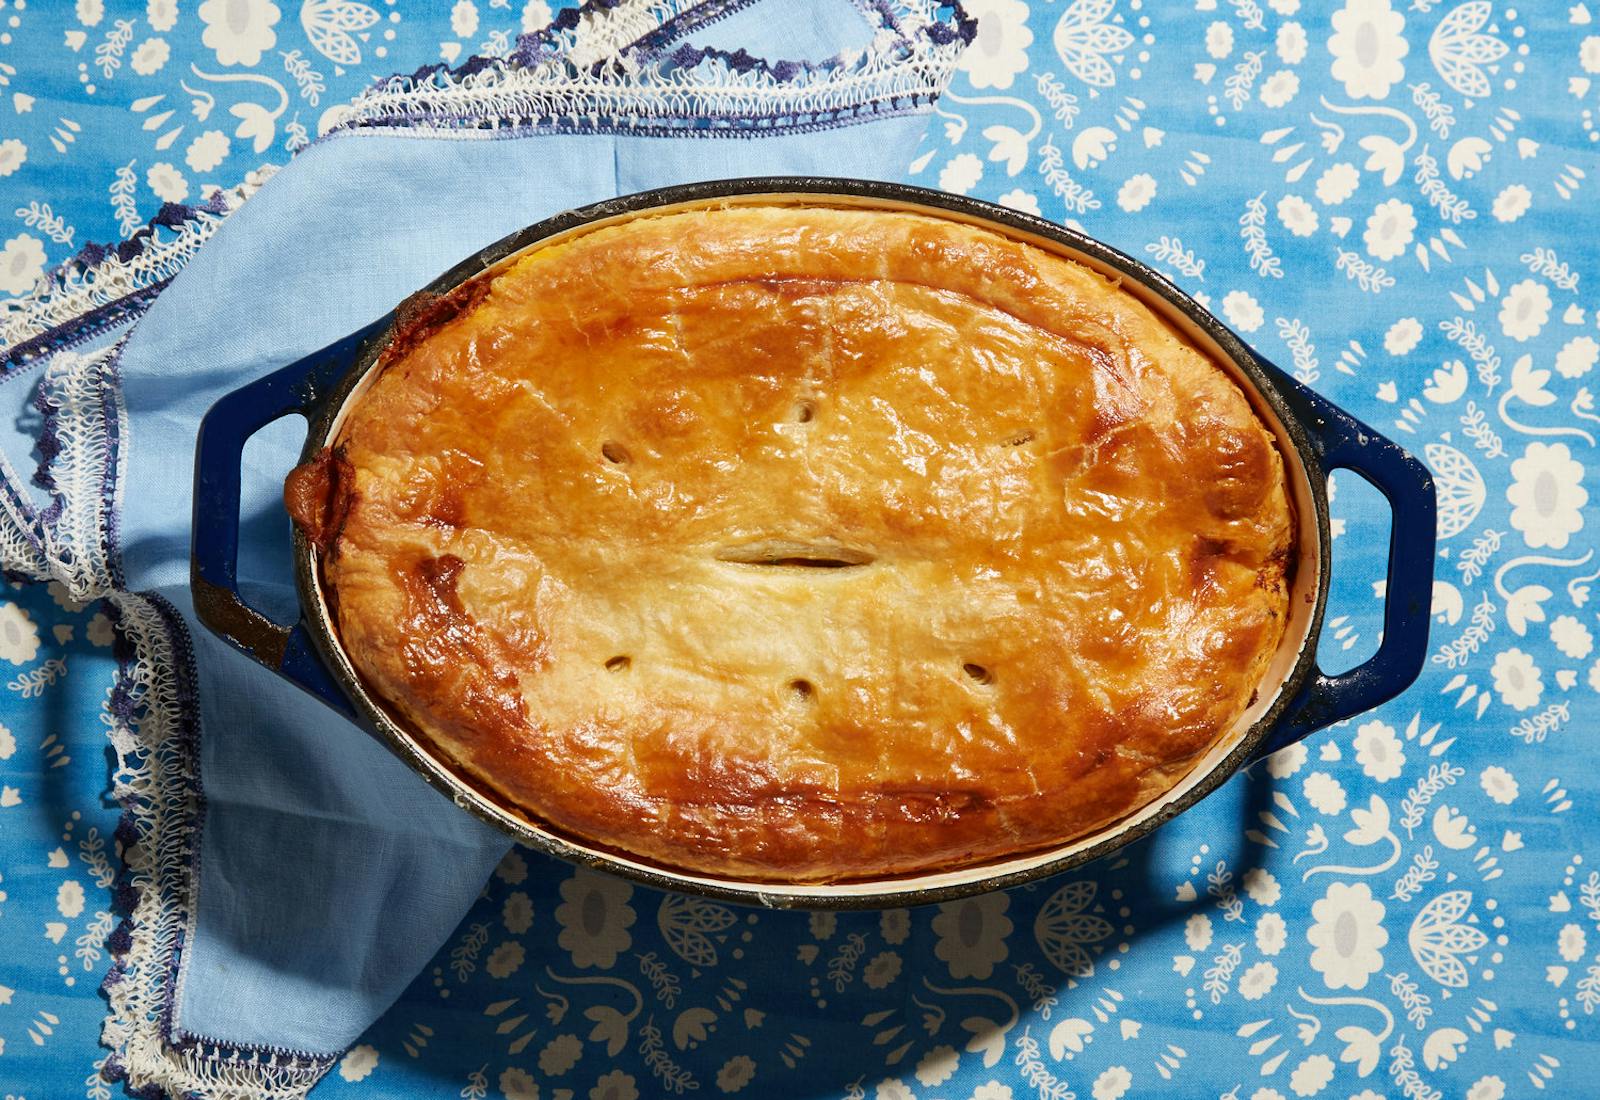 Cholent pot pie in cast iron casserole dish atop blue floral tablecloth with blue napkin.